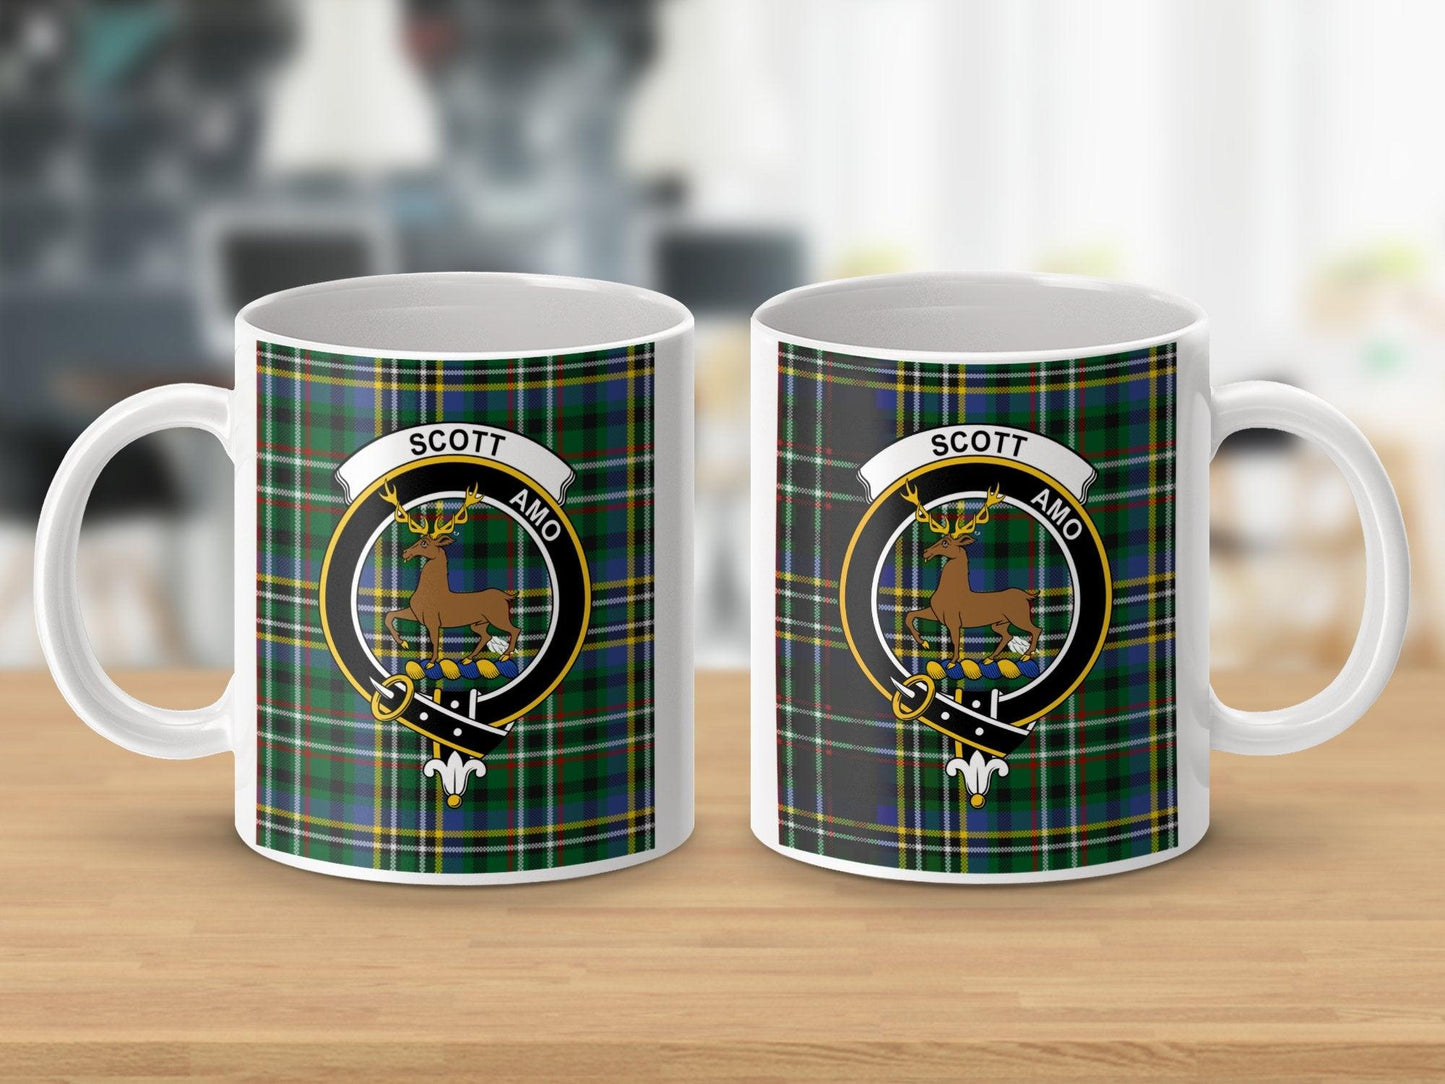 Scott Clan Crest Tartan Mug with Deer and Shield Design Mug - Living Stone Gifts